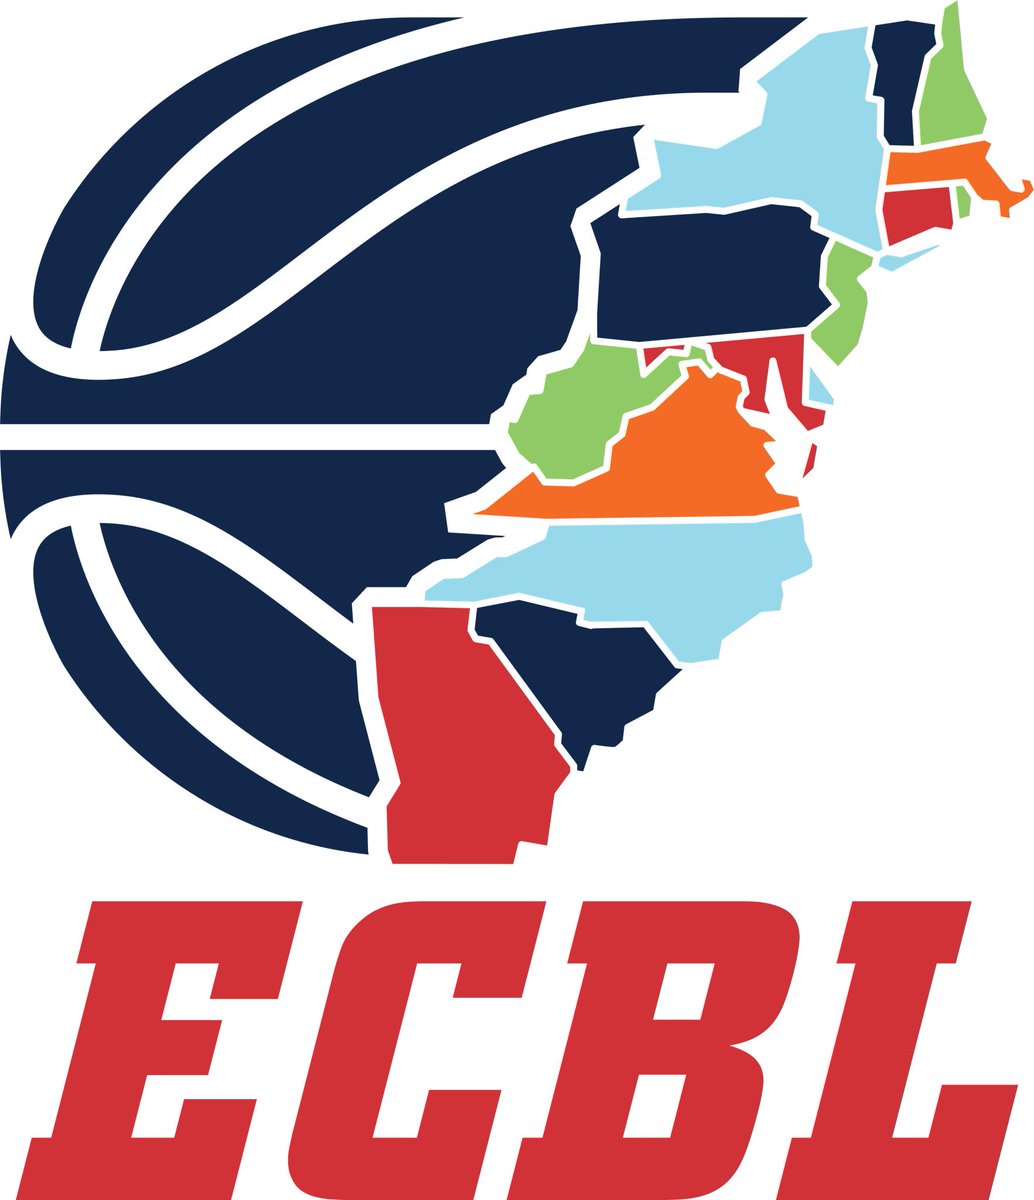 East Coast Basketball League Season 7 to begin this weekend eastcoastbasketballleague.org/teams/default.… #ECBL